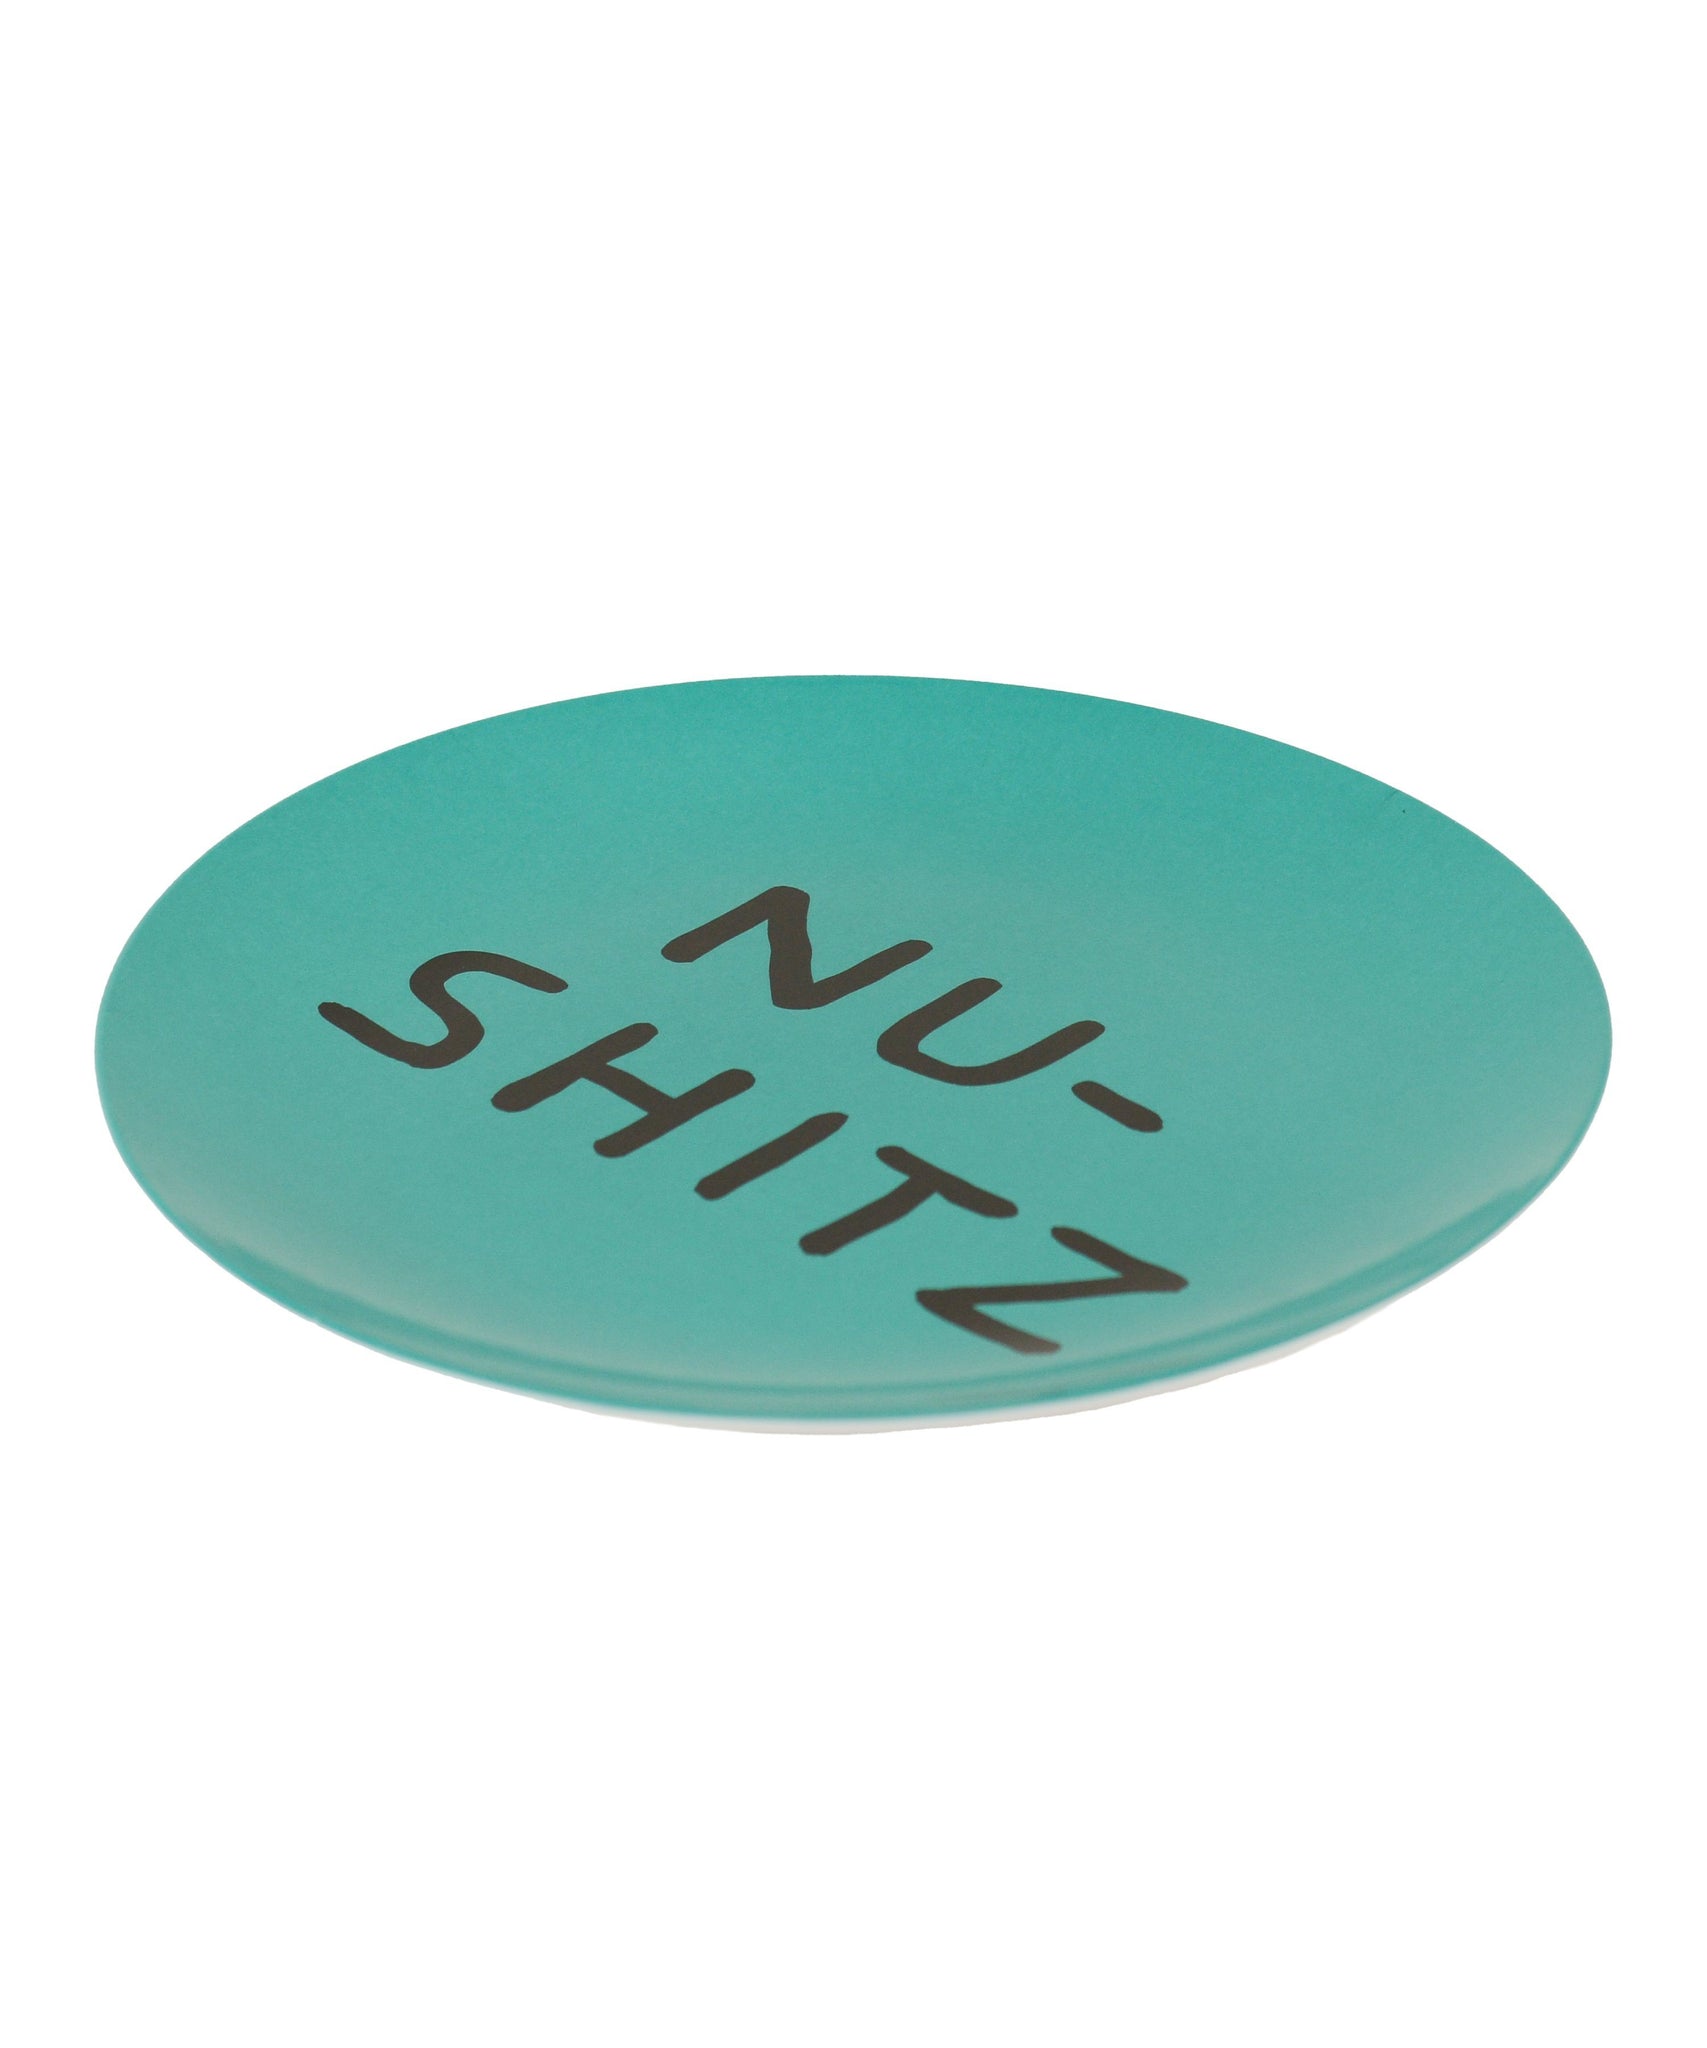 NU-SHITZ Melamine Plate x David Shrigley - Third Drawer Down